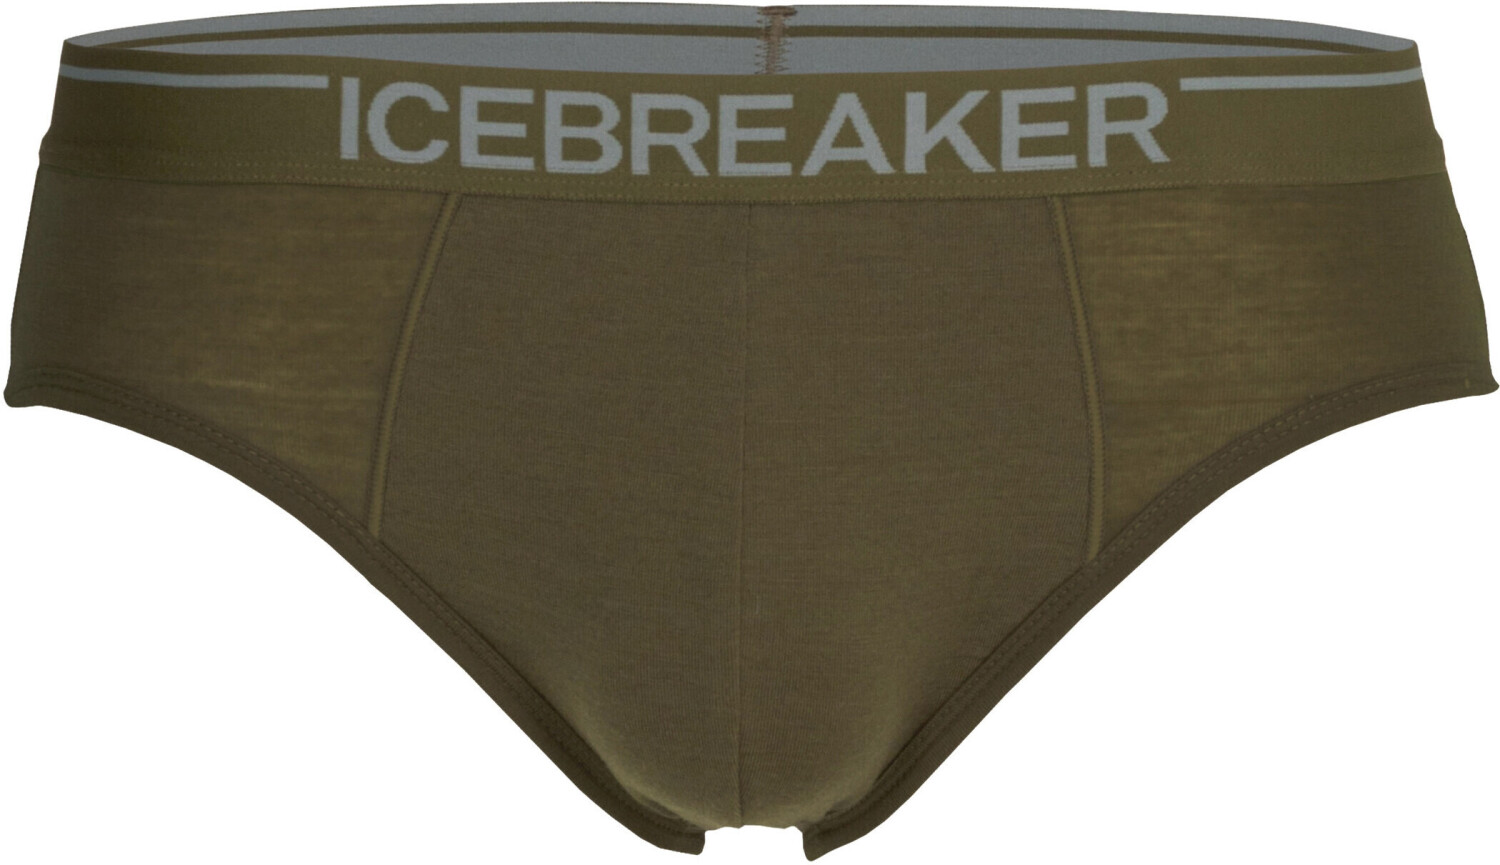 Icebreaker Anatomica Boxers - Merino base layer Men's